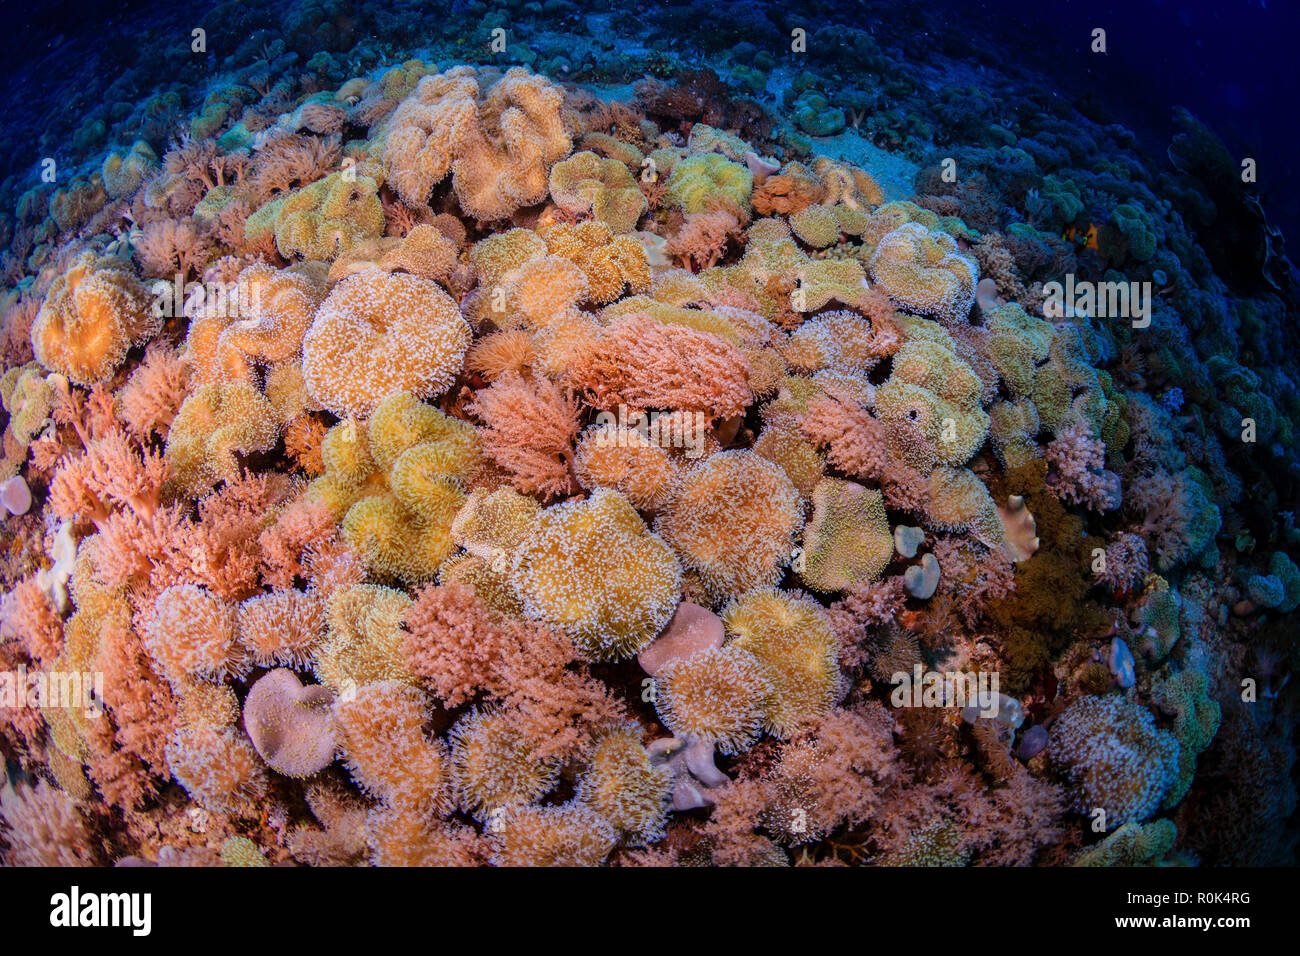 Colorful soft corals of Sengalaki, Indonesia. Stock Photo